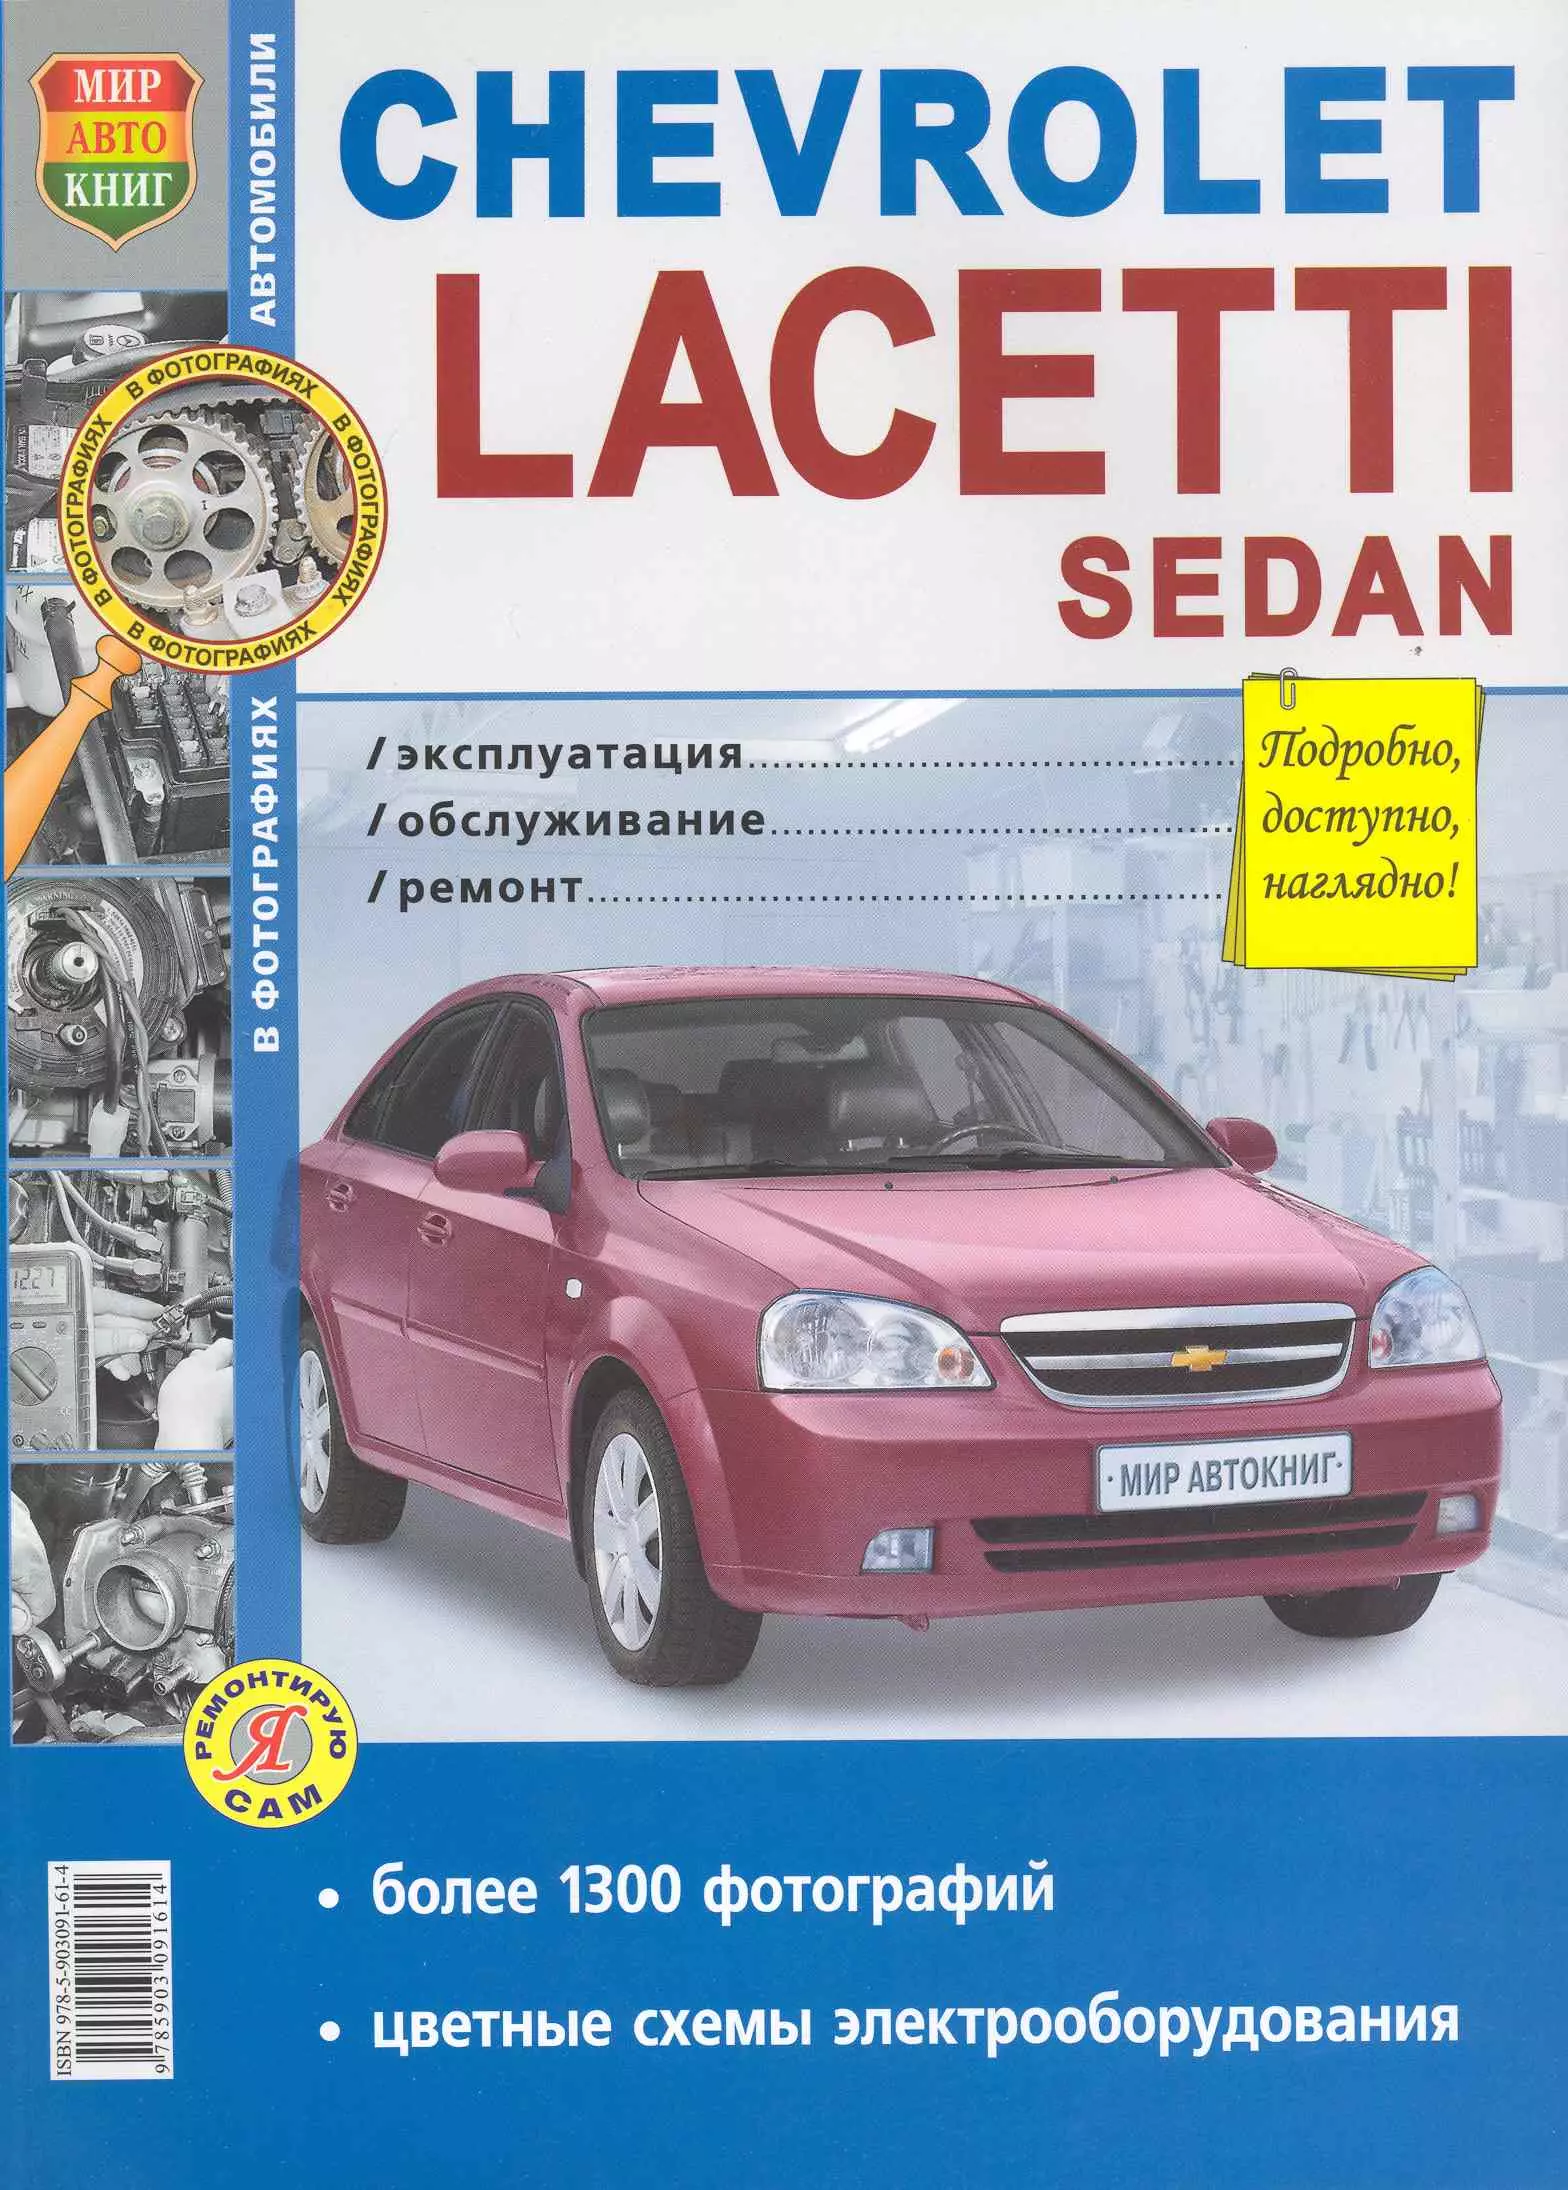  - Chevrolet Lacetti Sedan ч/б фото